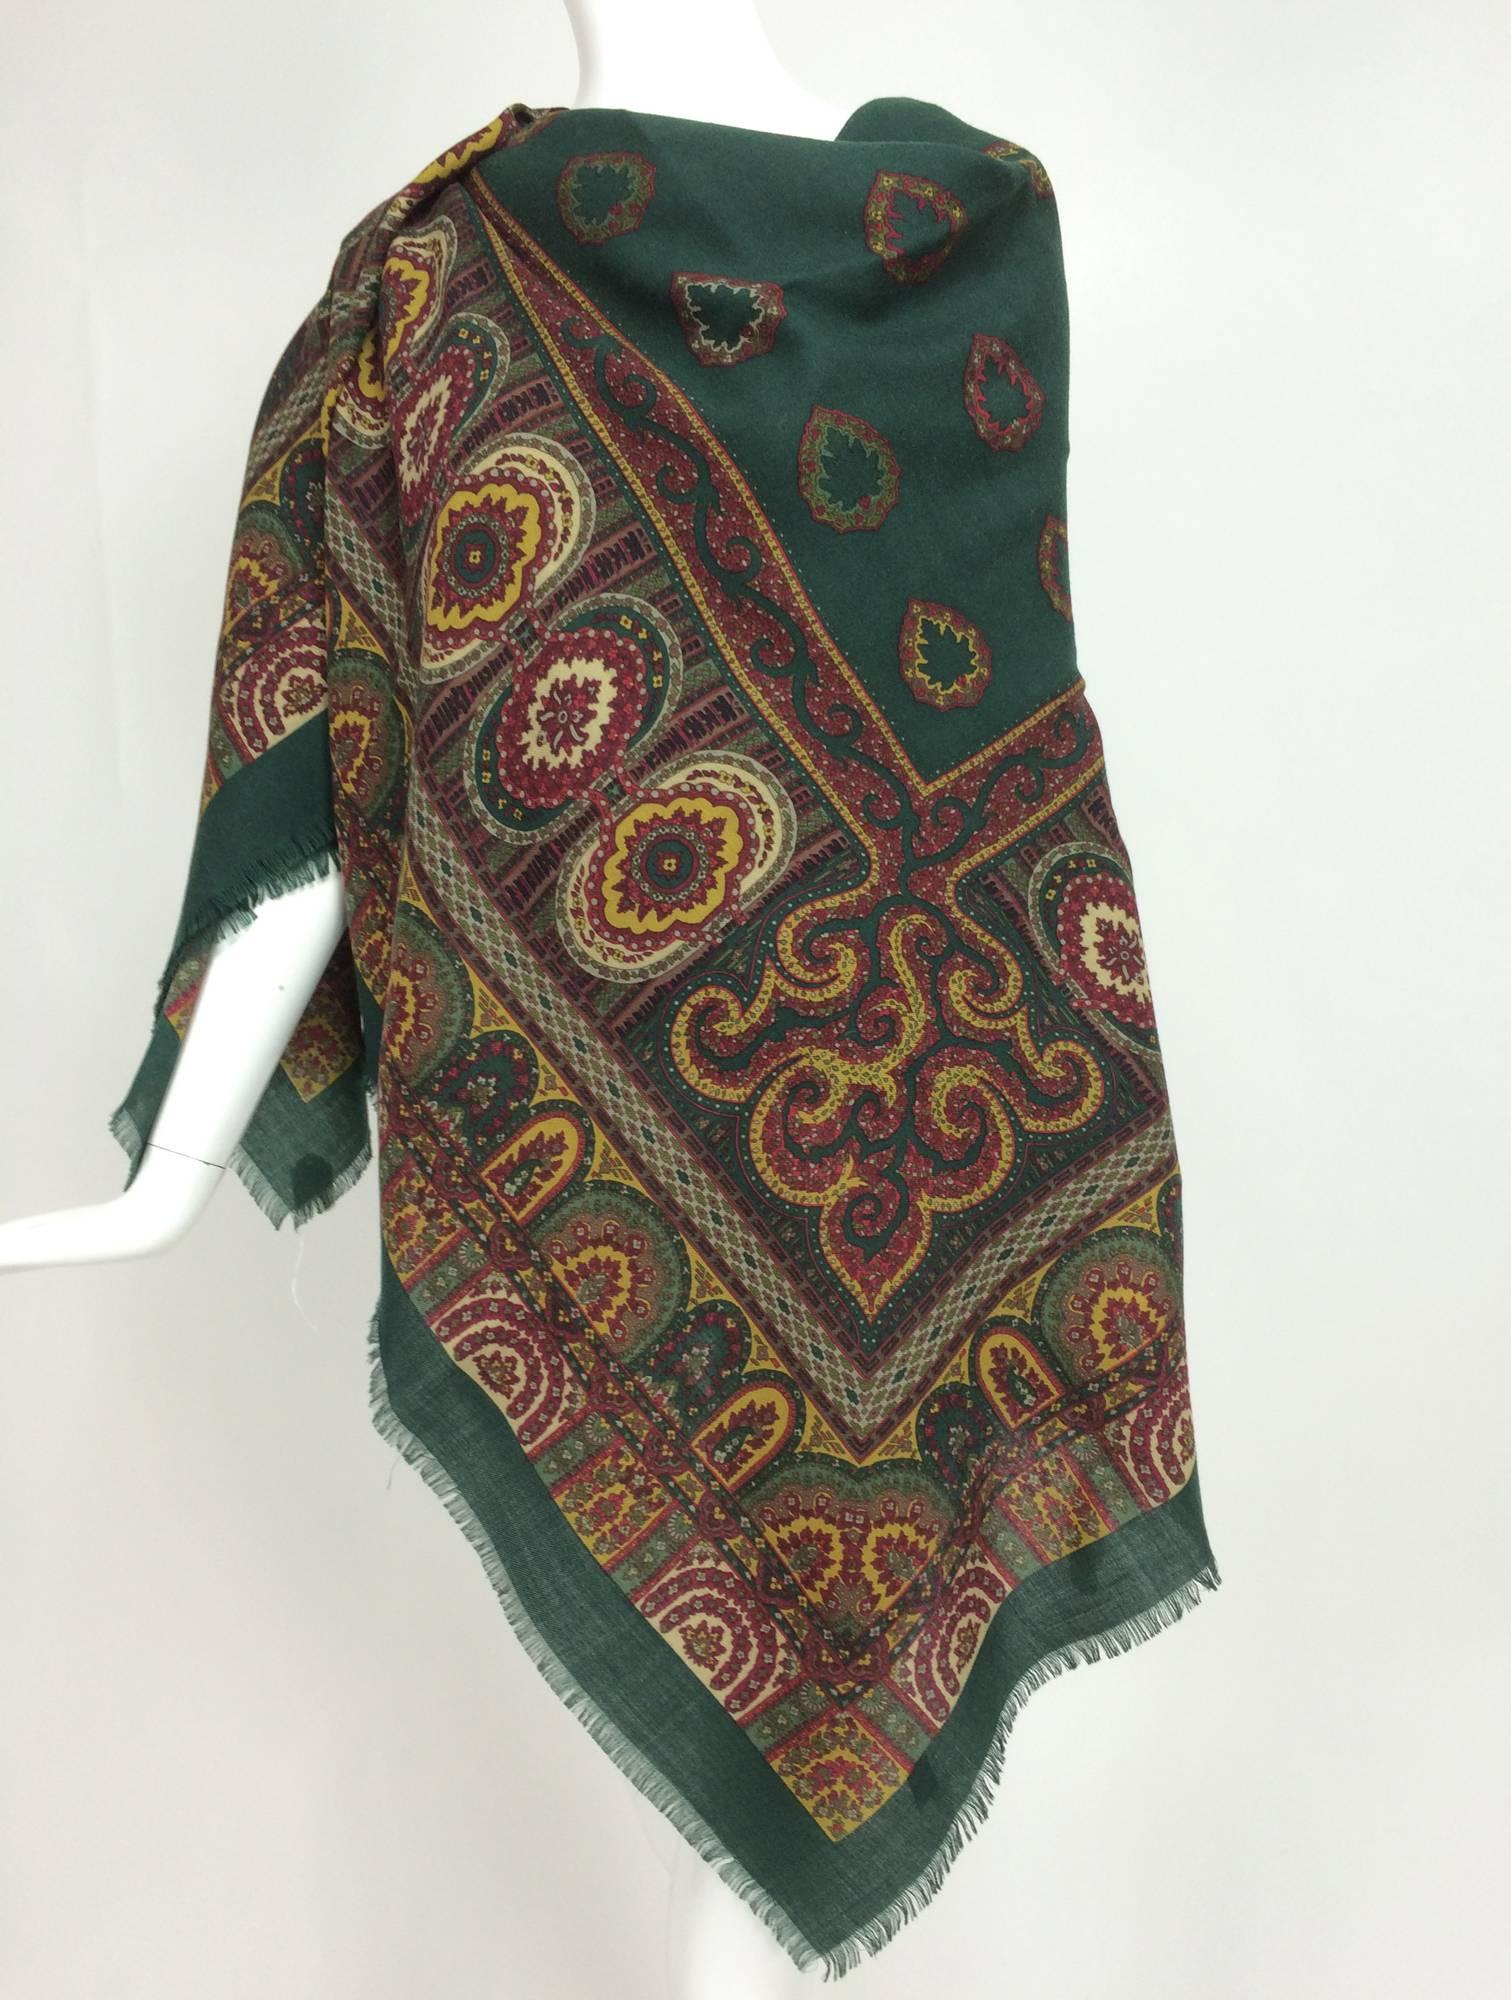 Gucci forest green paisley wool challis shawl 54